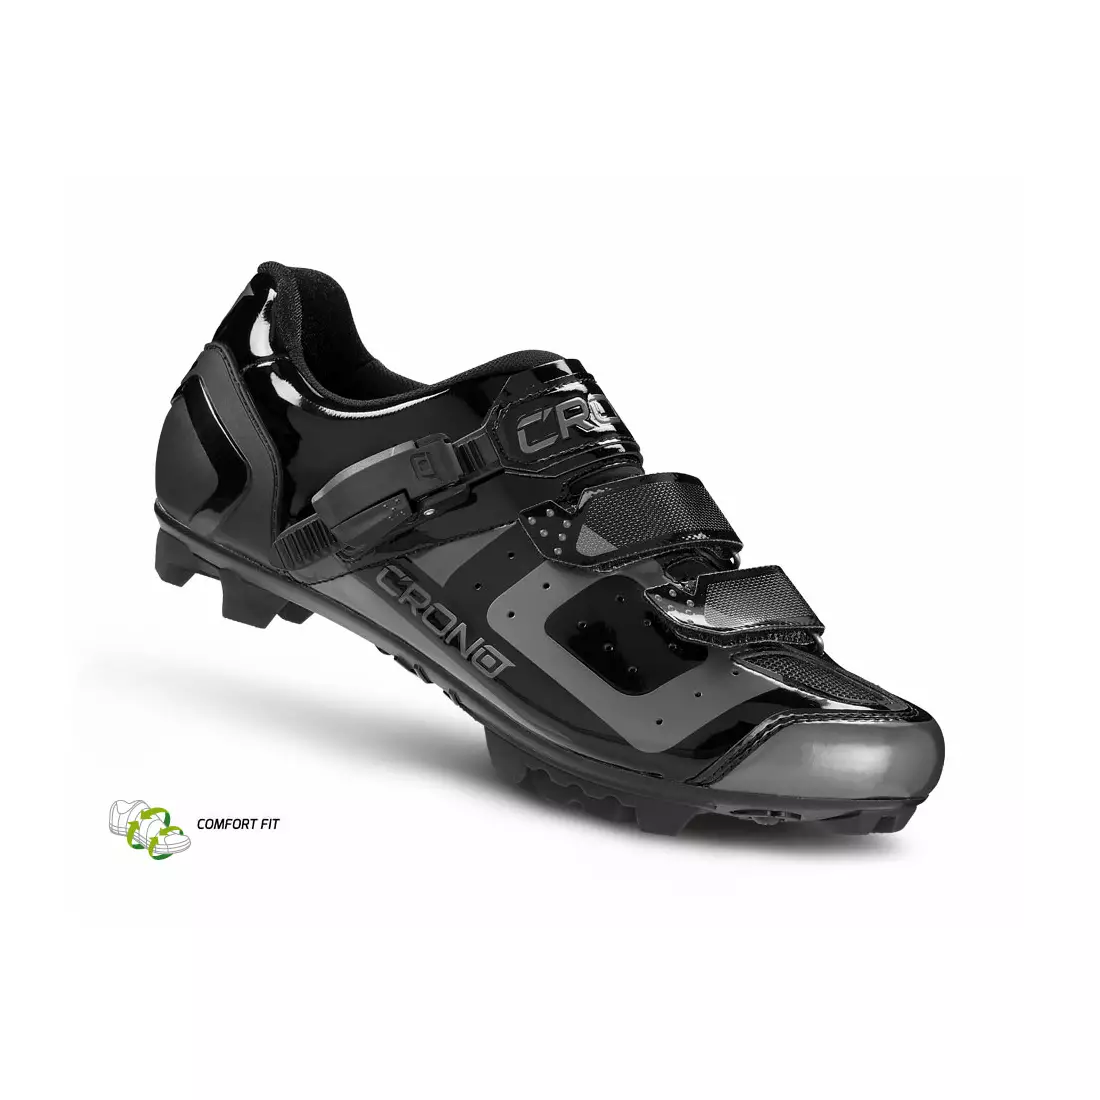 CRONO CX3 nylon - Fahrradschuhe MTB, Schwarz